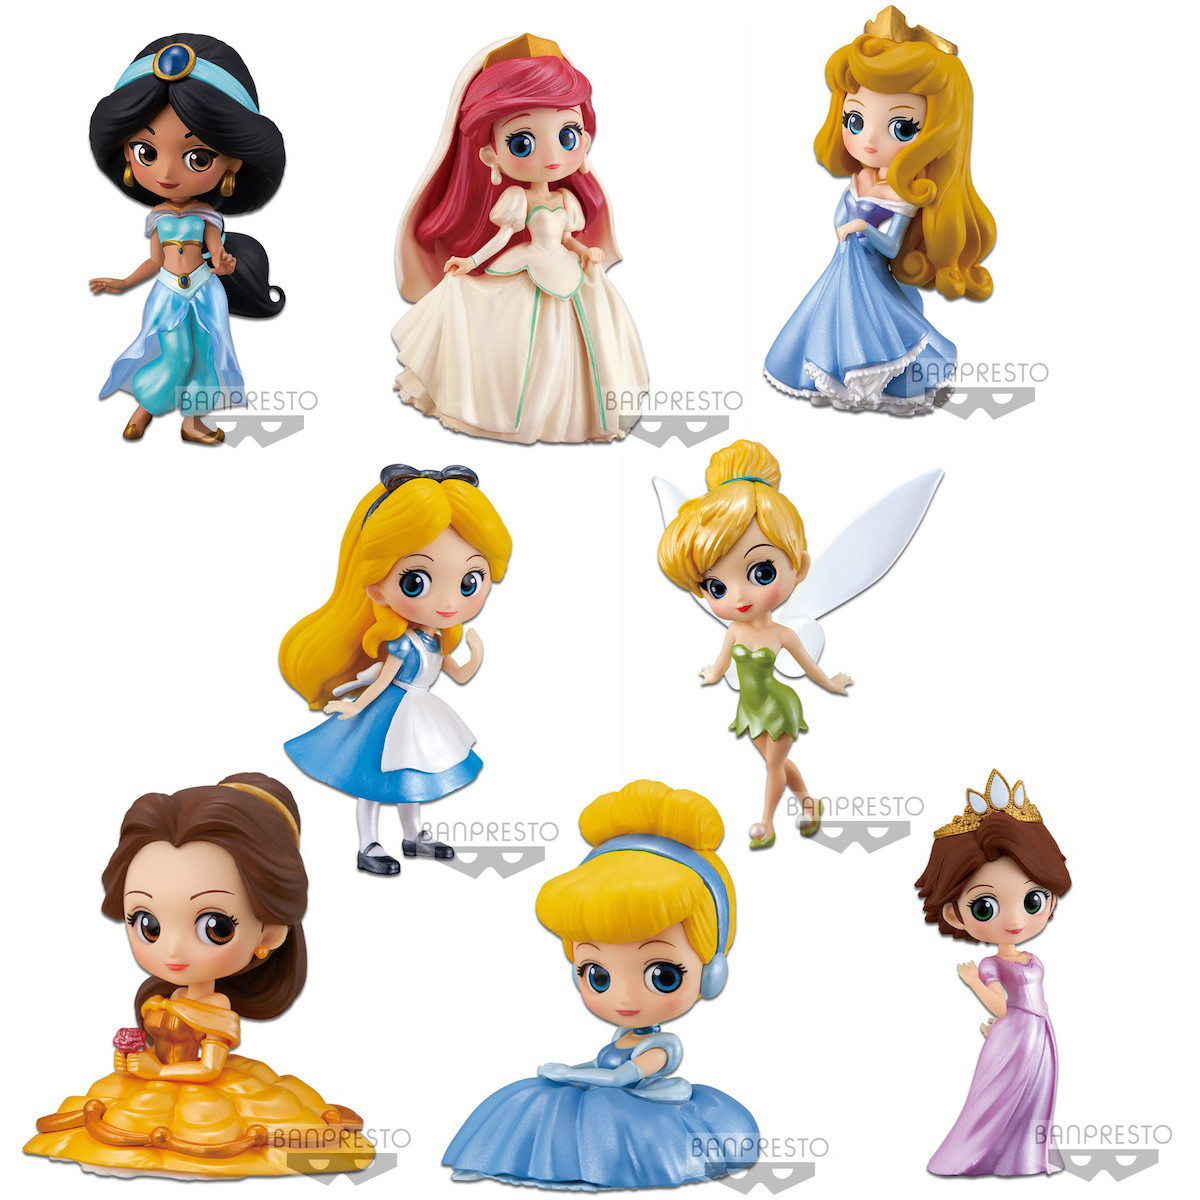 Japan Banpresto Q Posket Disney Characters Petit Princess Figure Vol 8 